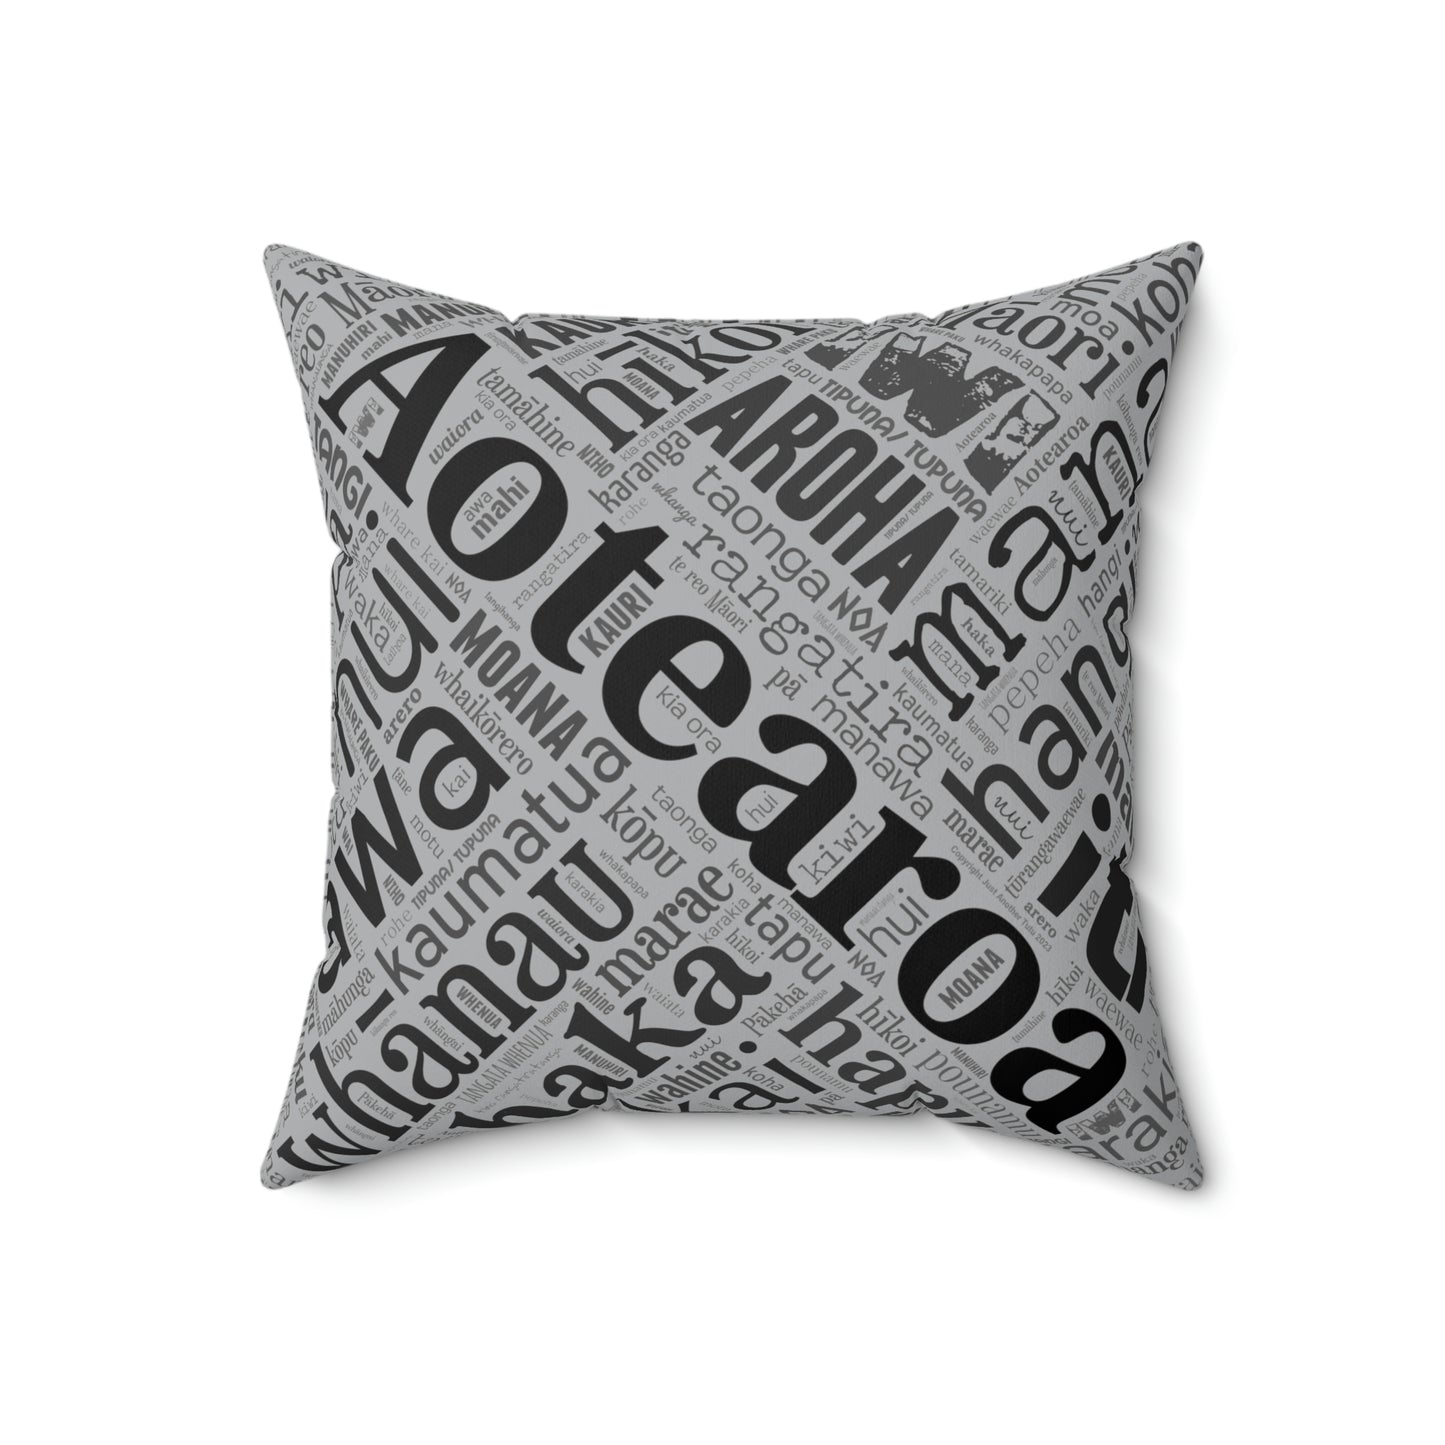 Grey Māori Word Art Square Pillow